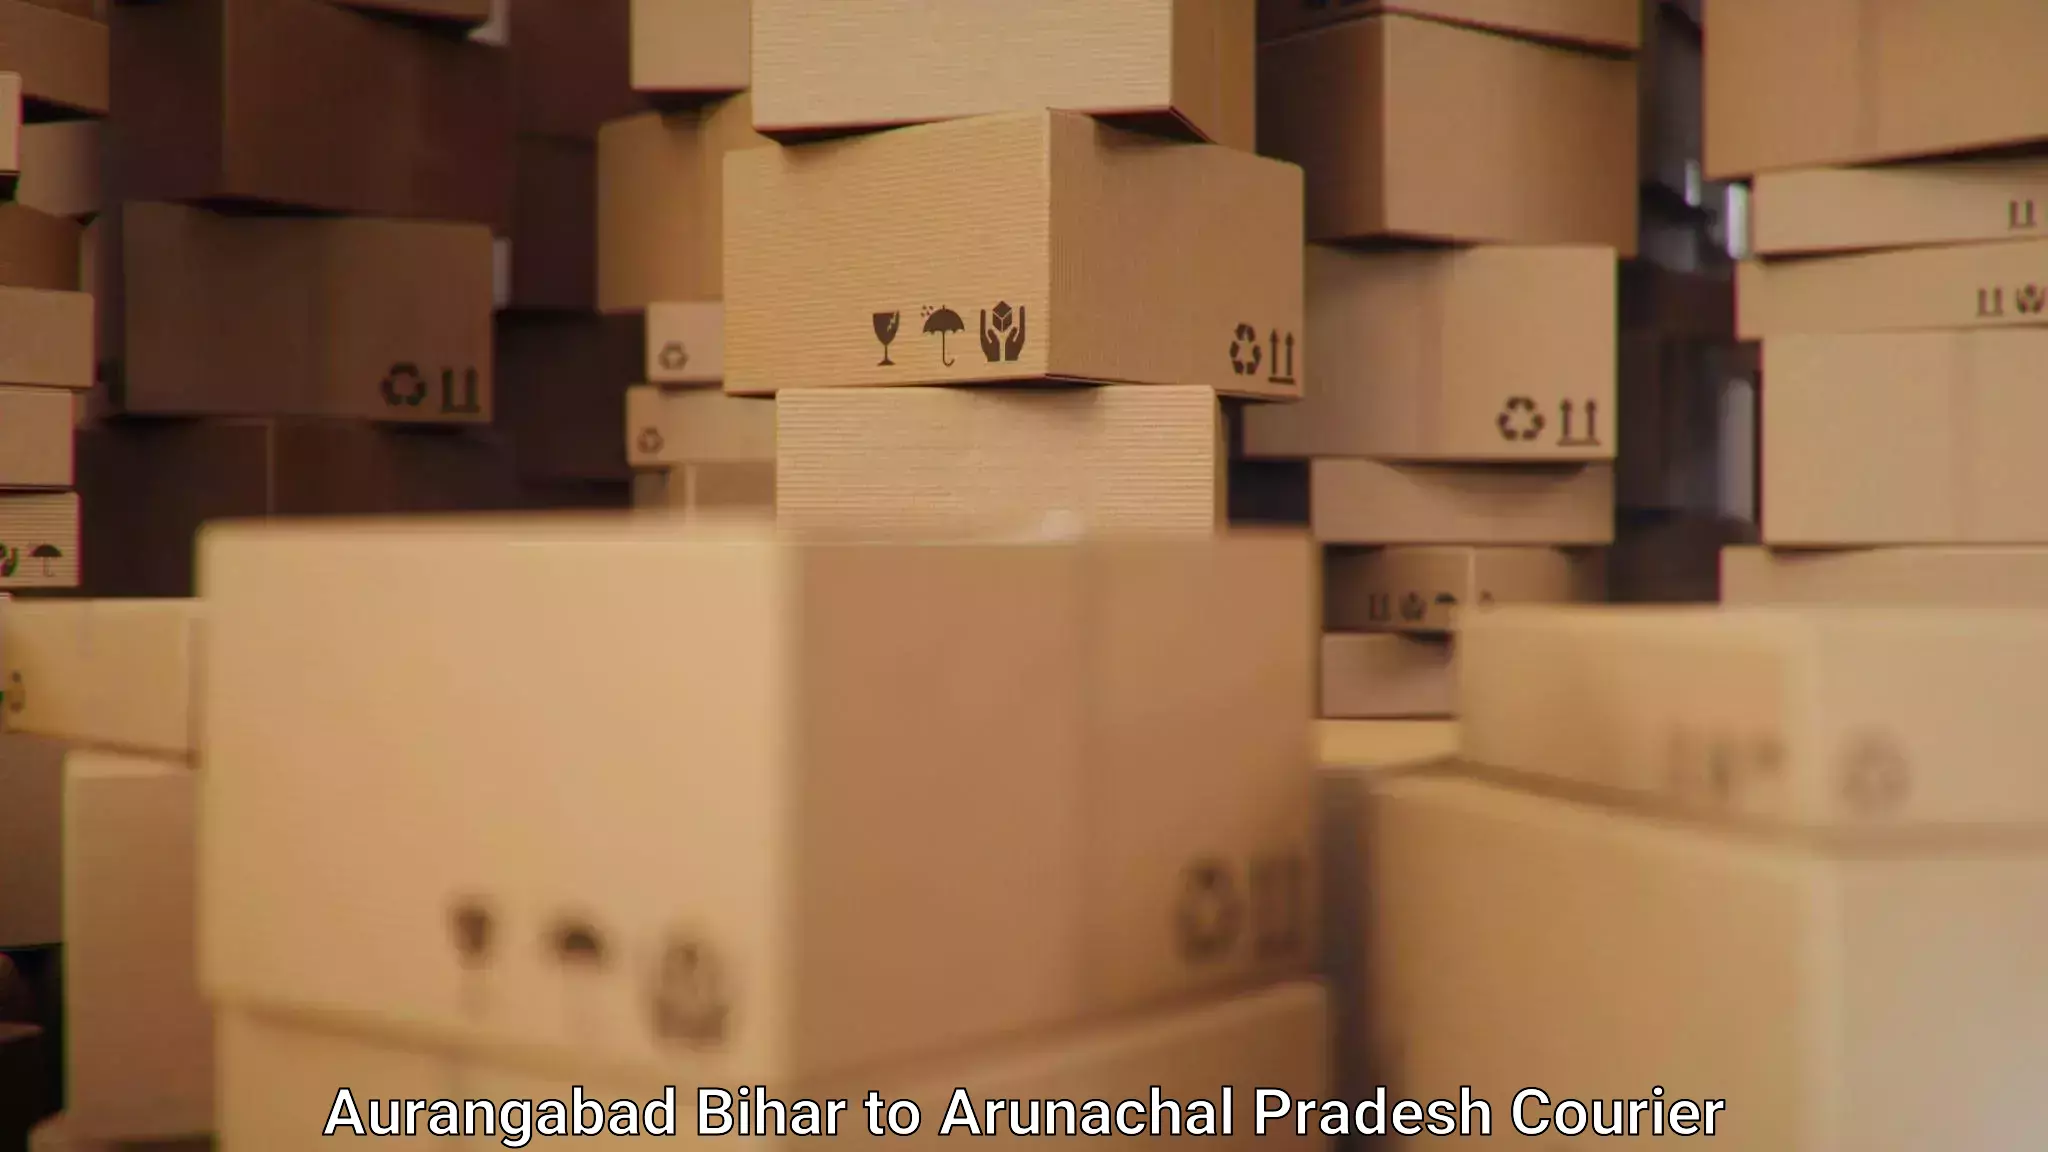 Fast delivery service Aurangabad Bihar to Yazali